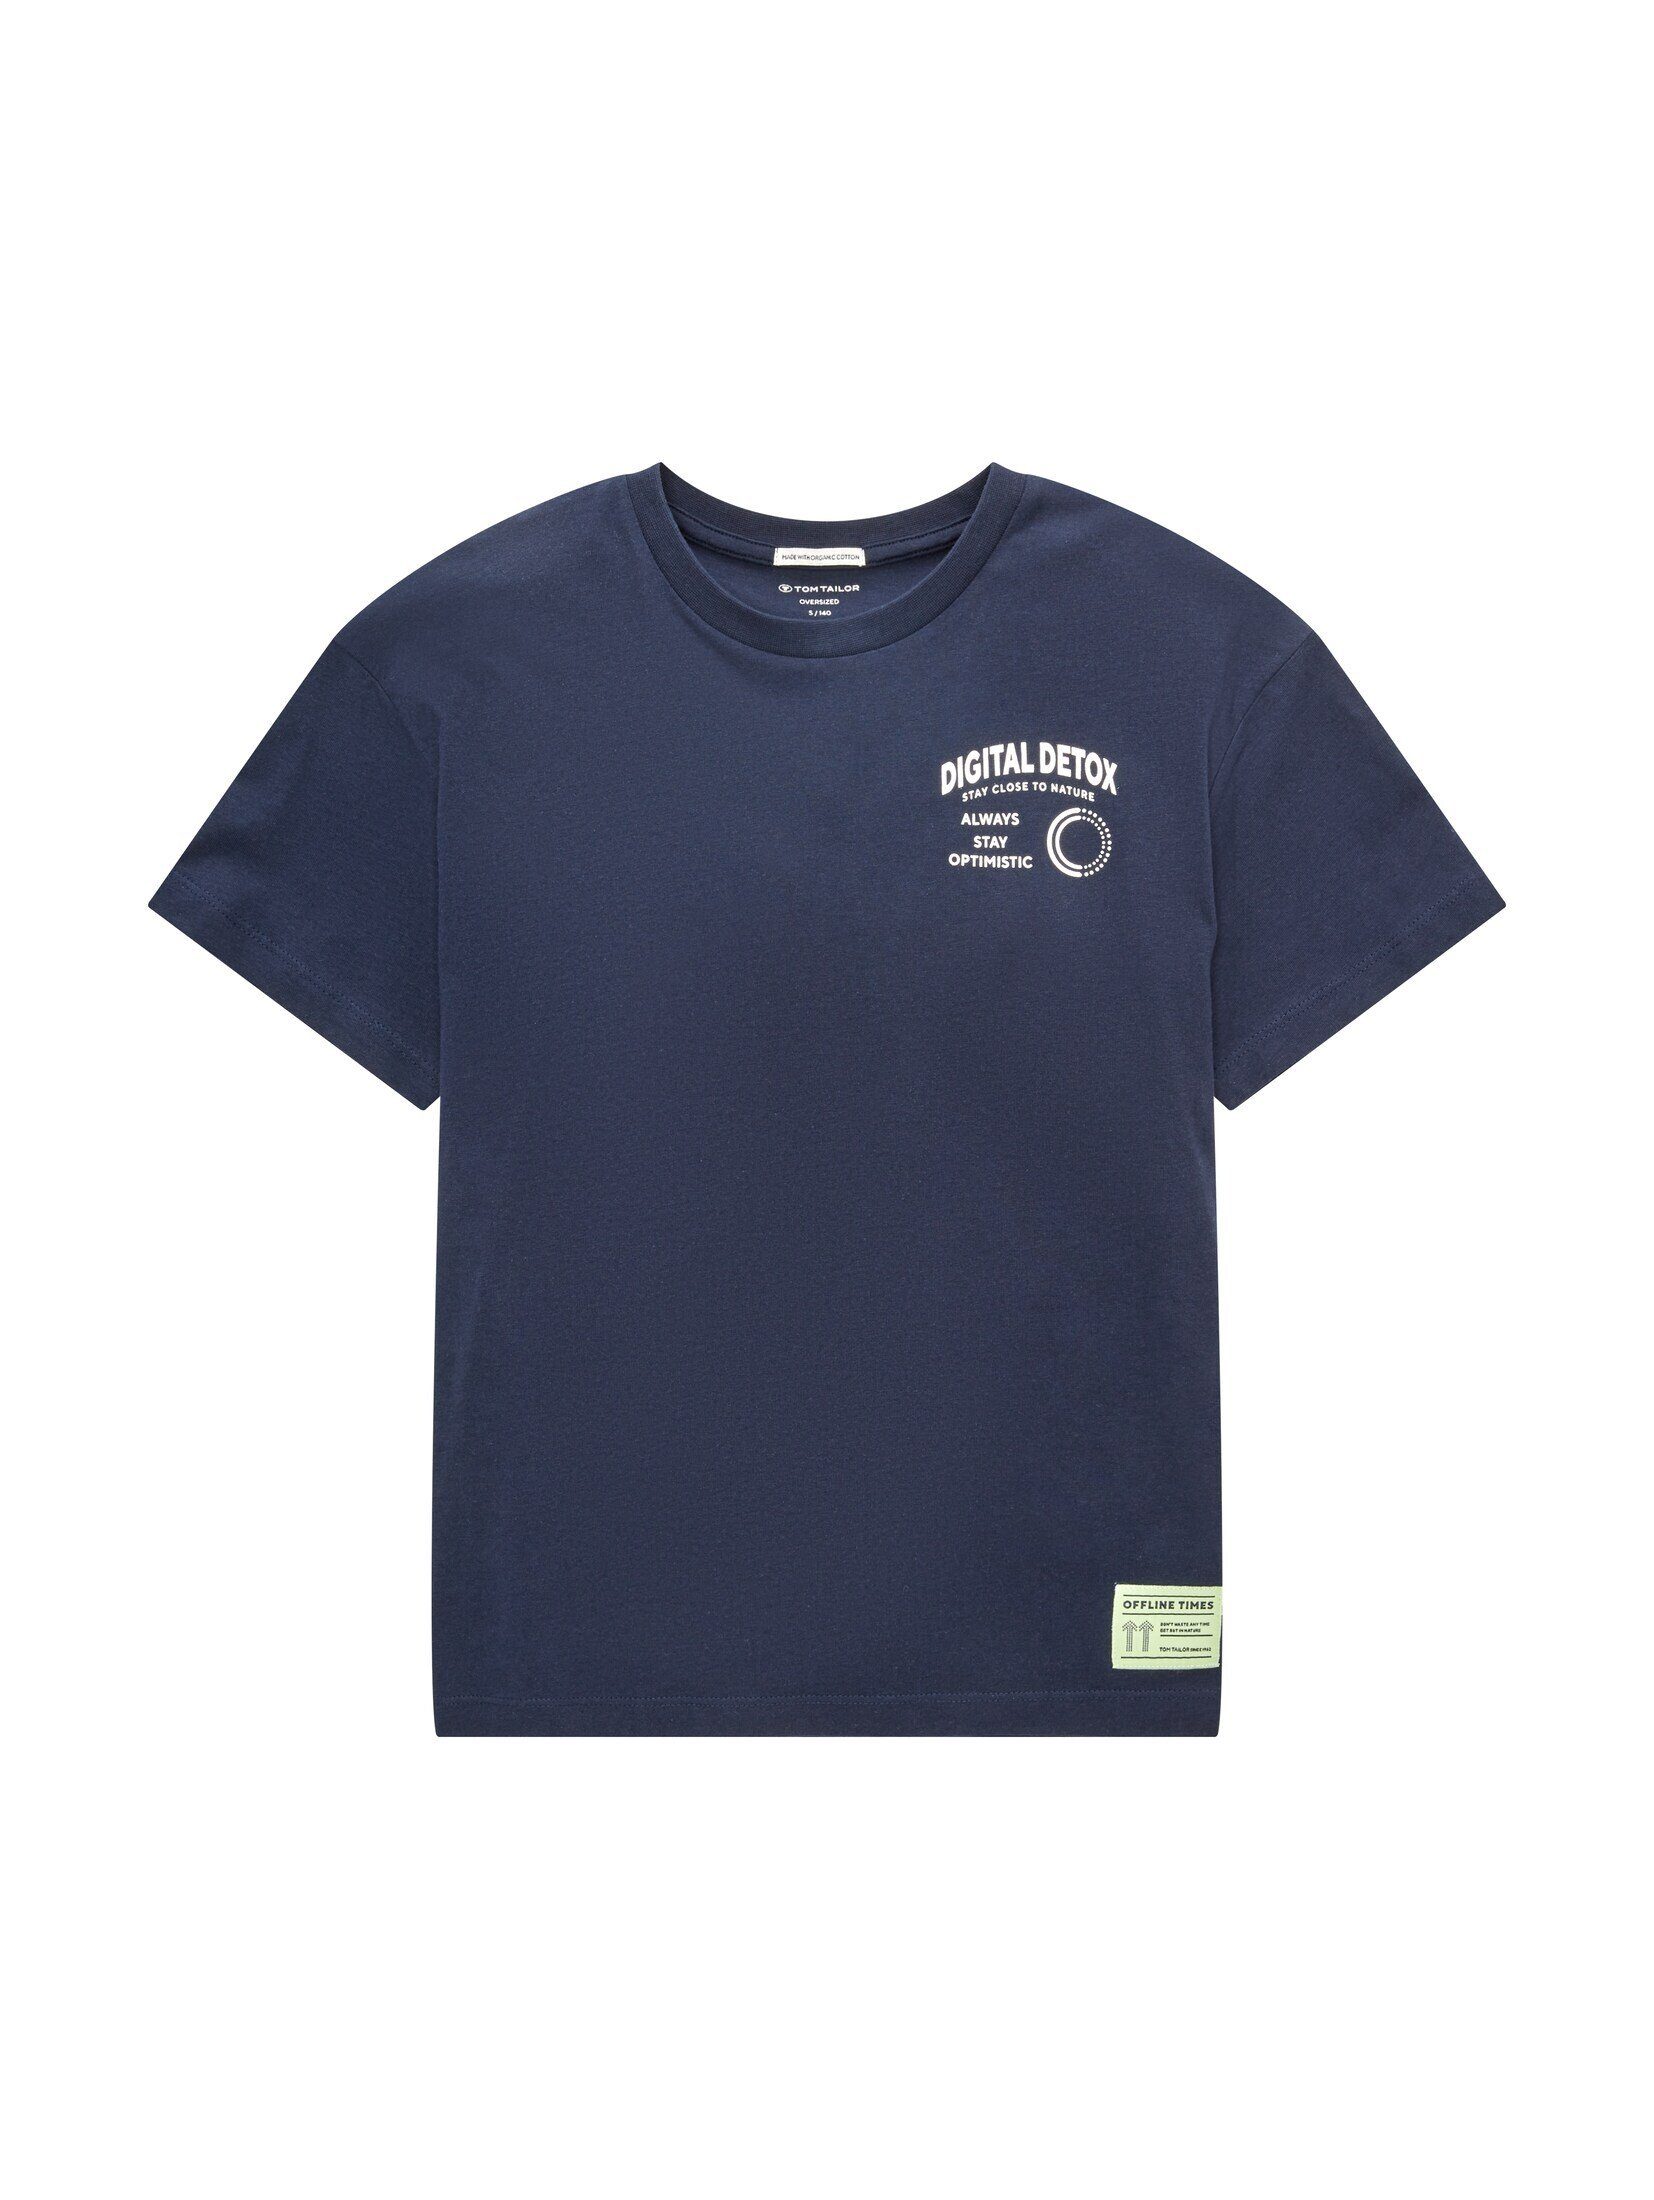 TOM TAILOR T-Shirt T-Shirt mit Textprint sky captain blue